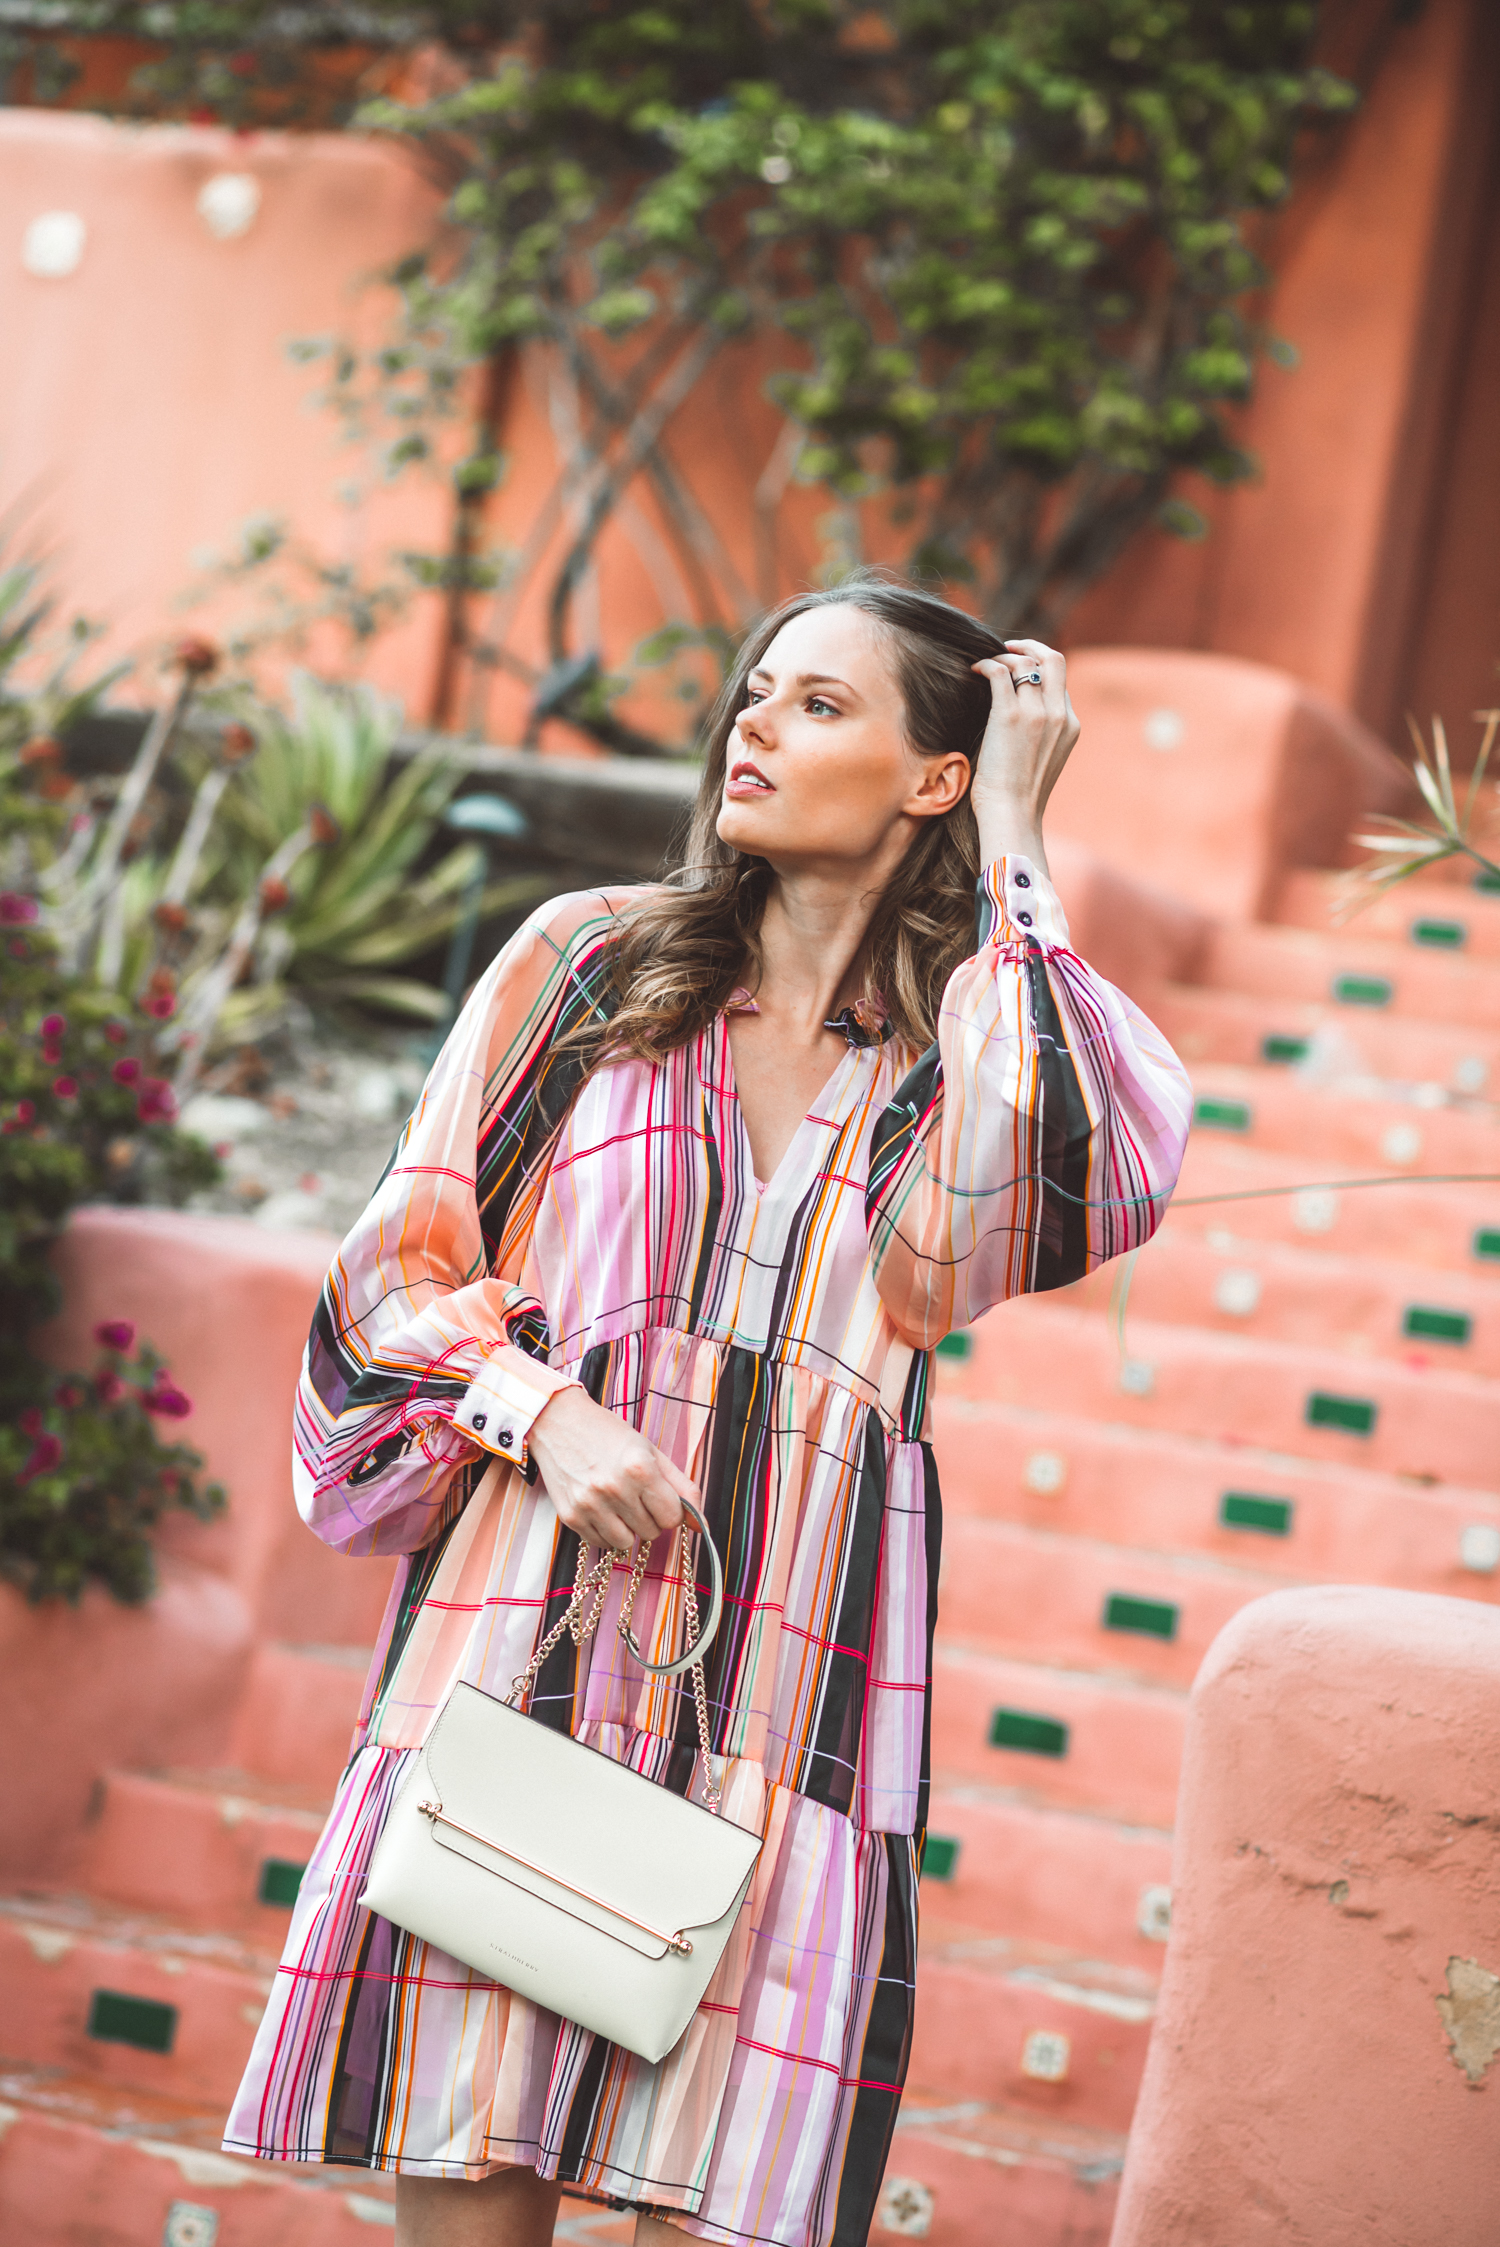 Alyssa Campanella of The A List blog shares 5 Danish brands to know wearing Stine Goya Jasmine dress and Strathberry stylist bag